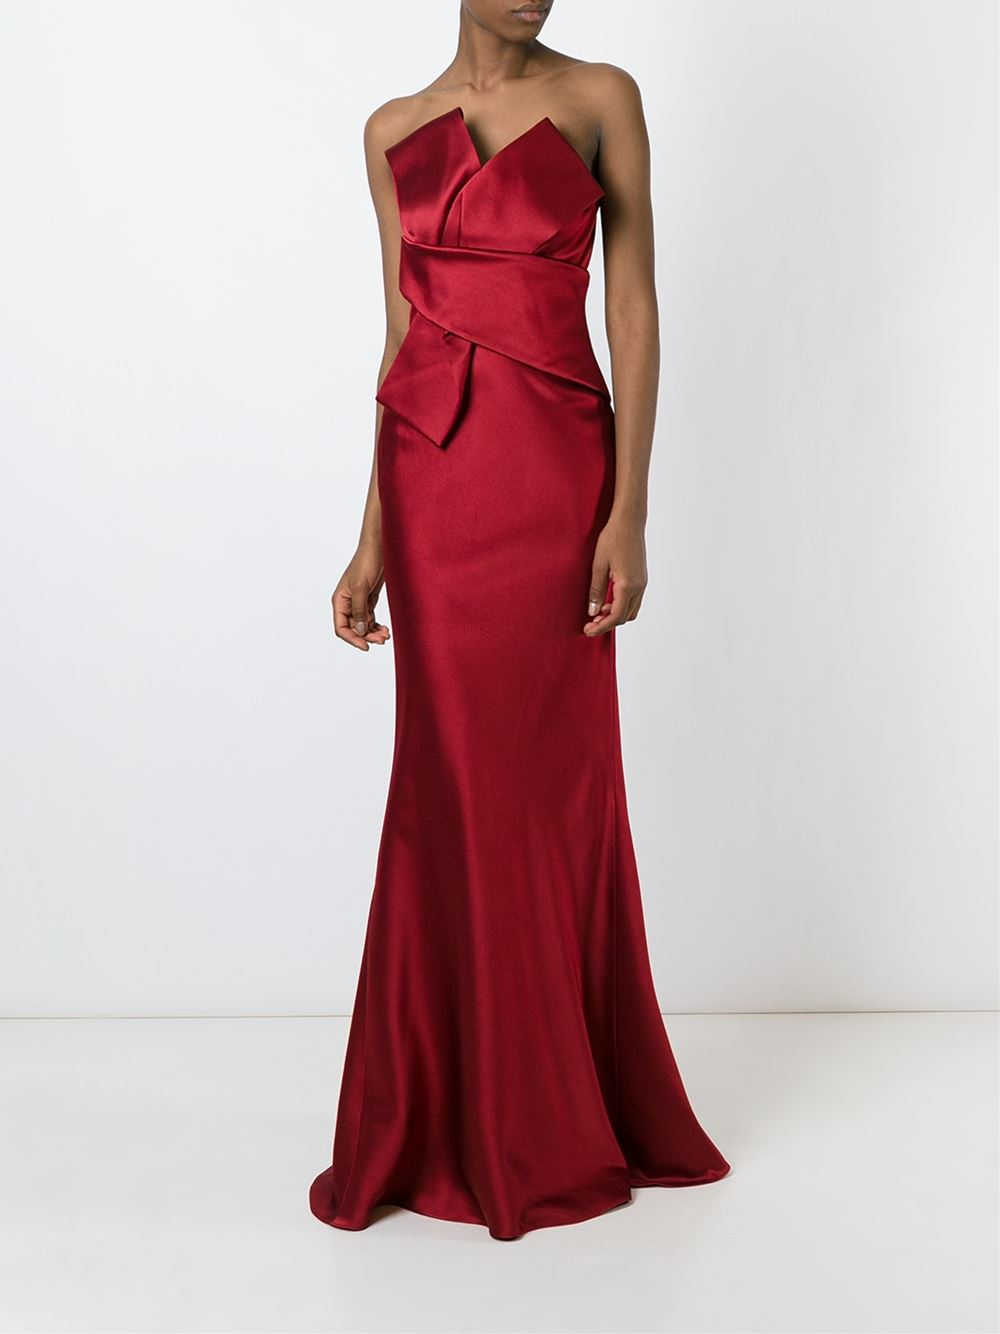 Lyst - Alexander McQueen Bow Bustier Evening Dress in Red